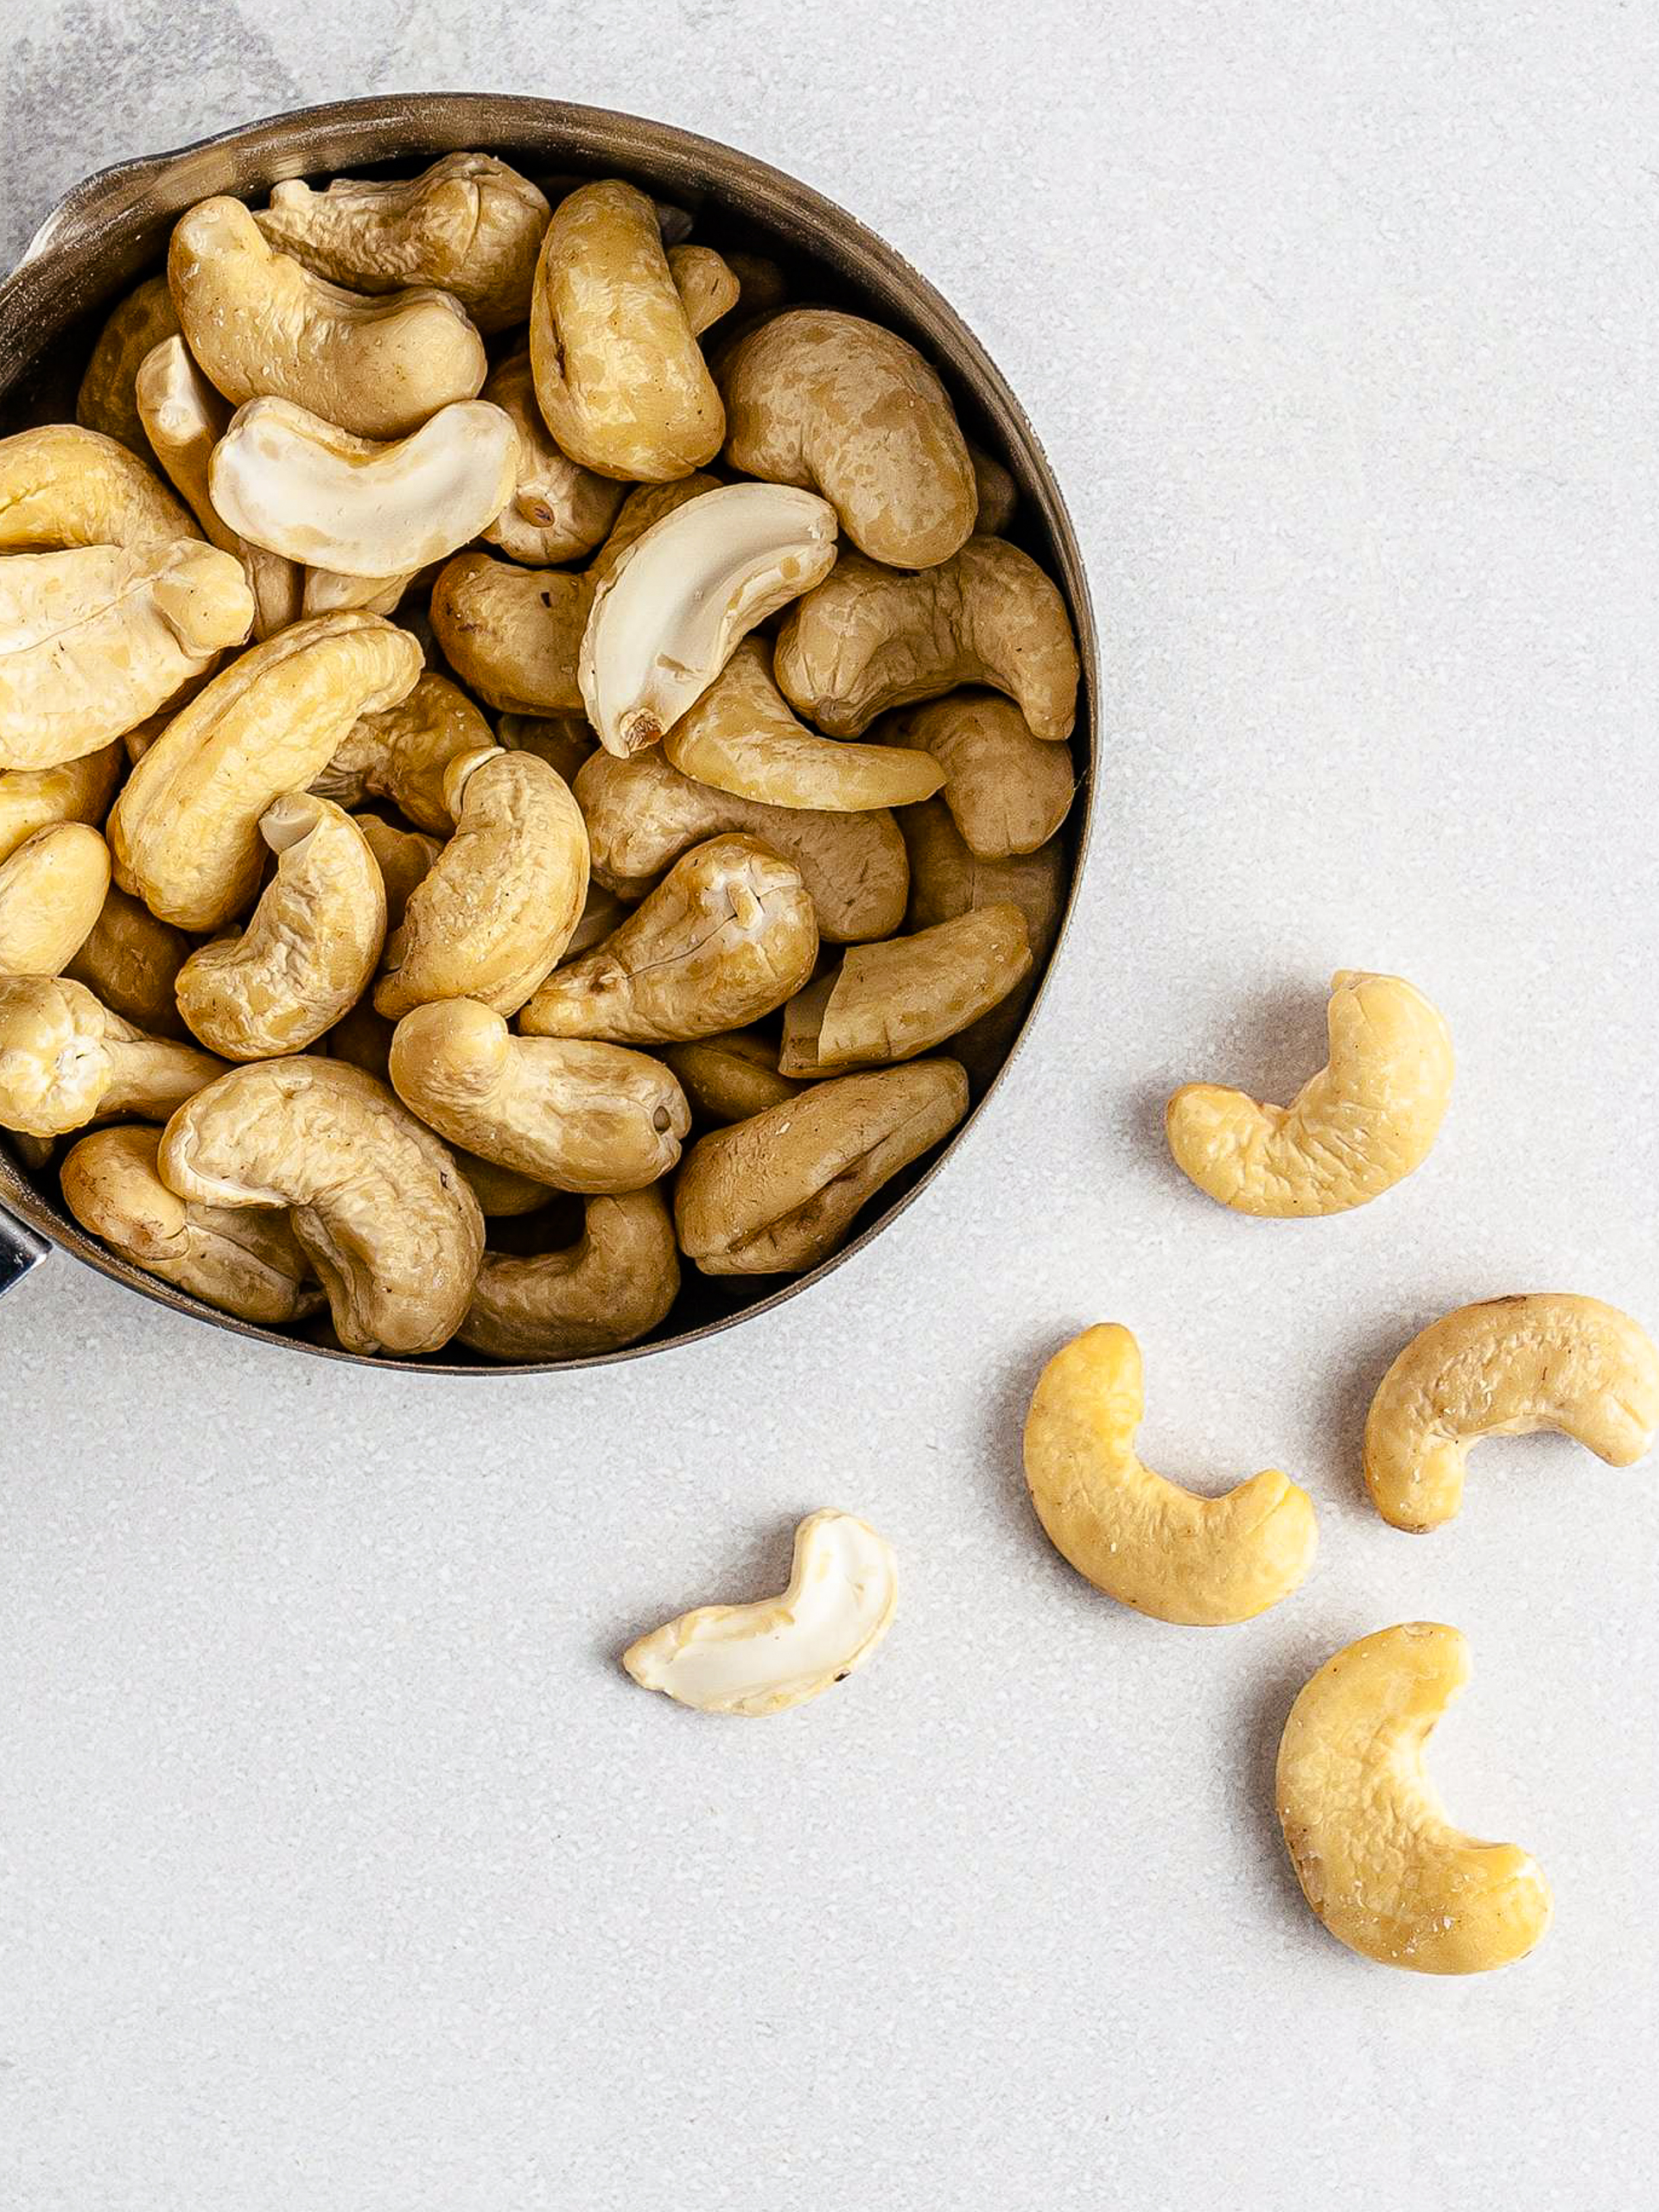 7 Creative Ways to Use Cashews in Healthy Vegan Recipes